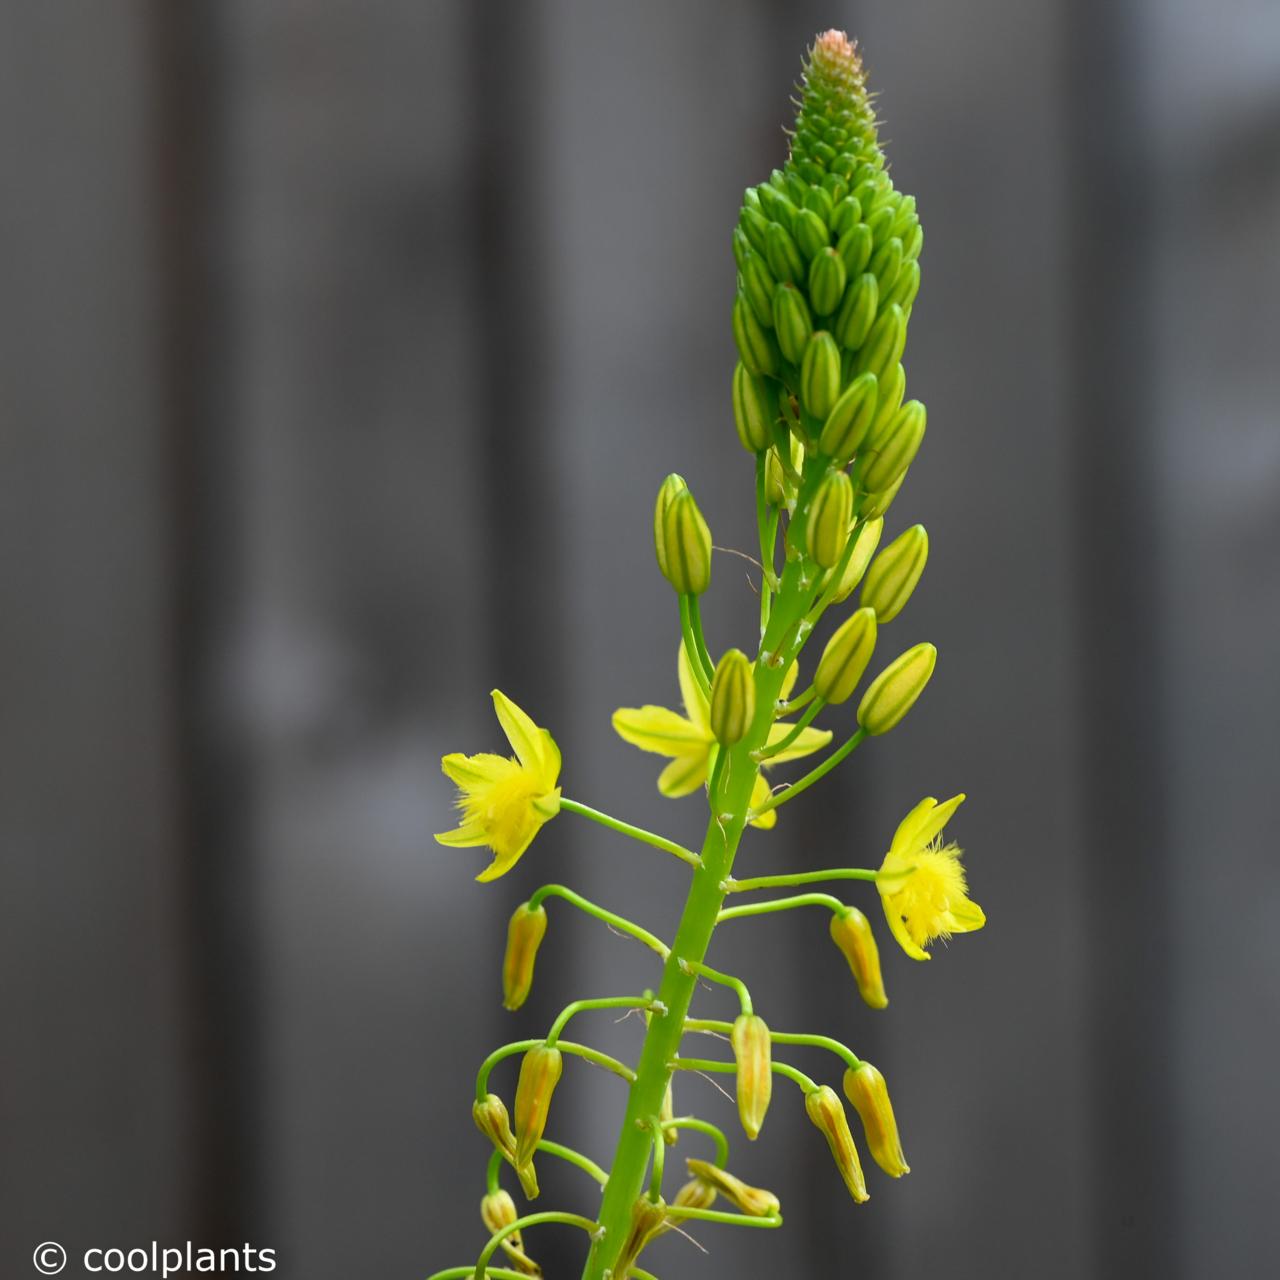 Bulbine frutescens (Yellow) plant